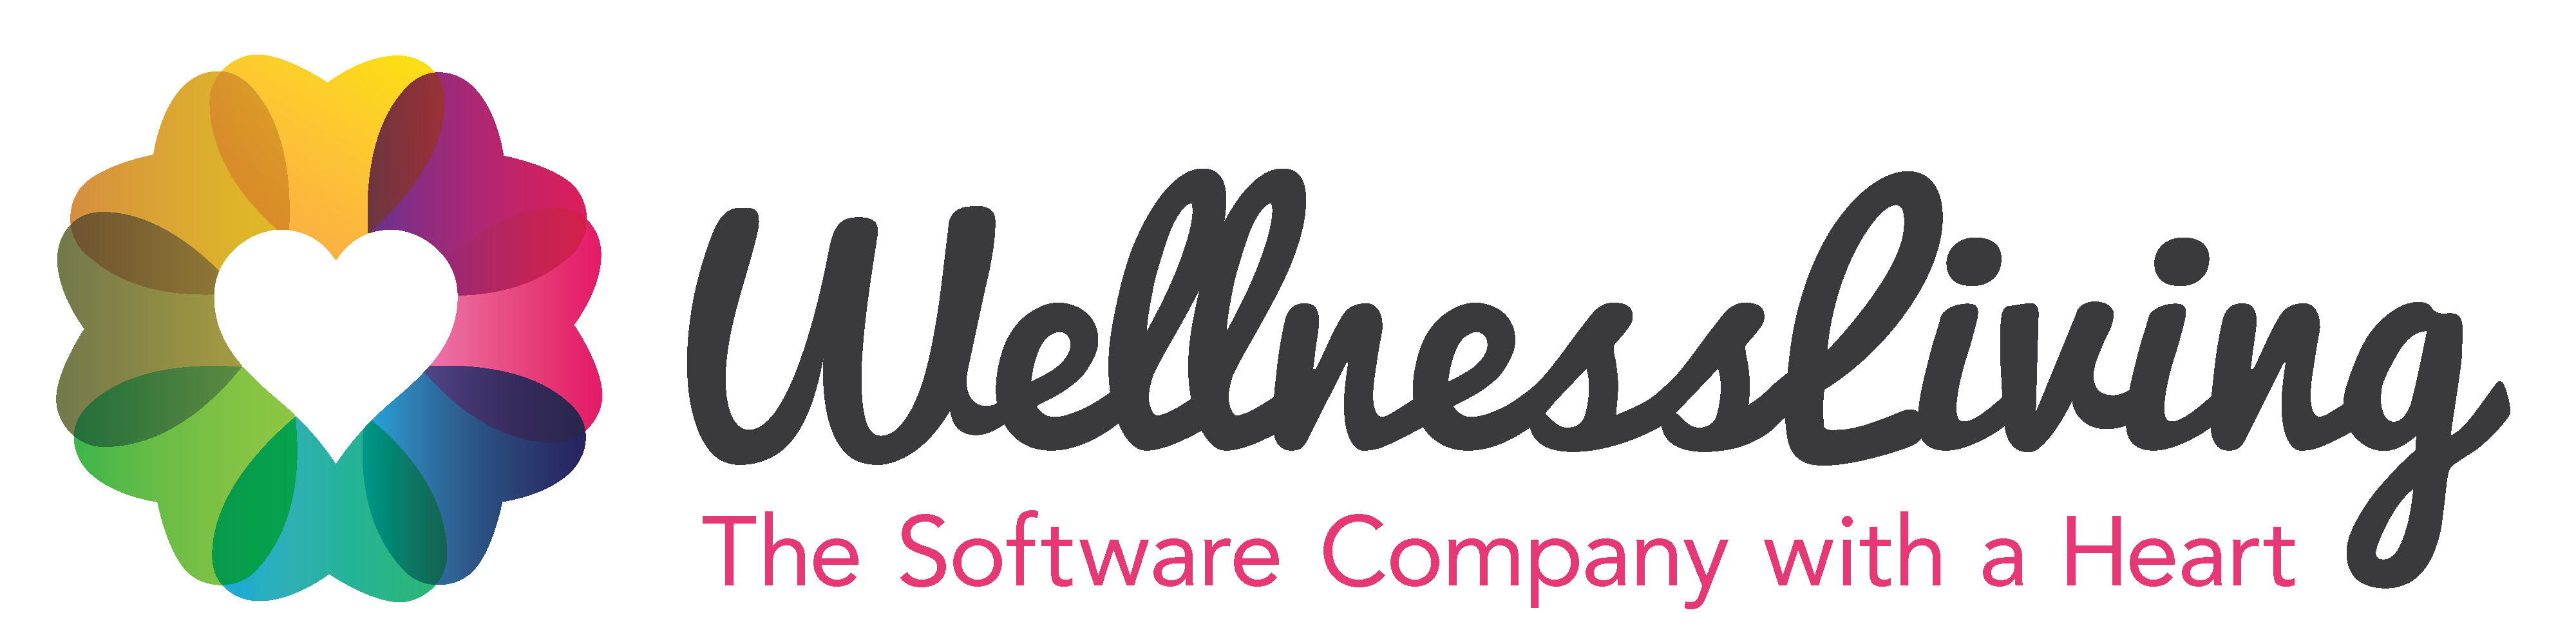 Wellness Living logo.